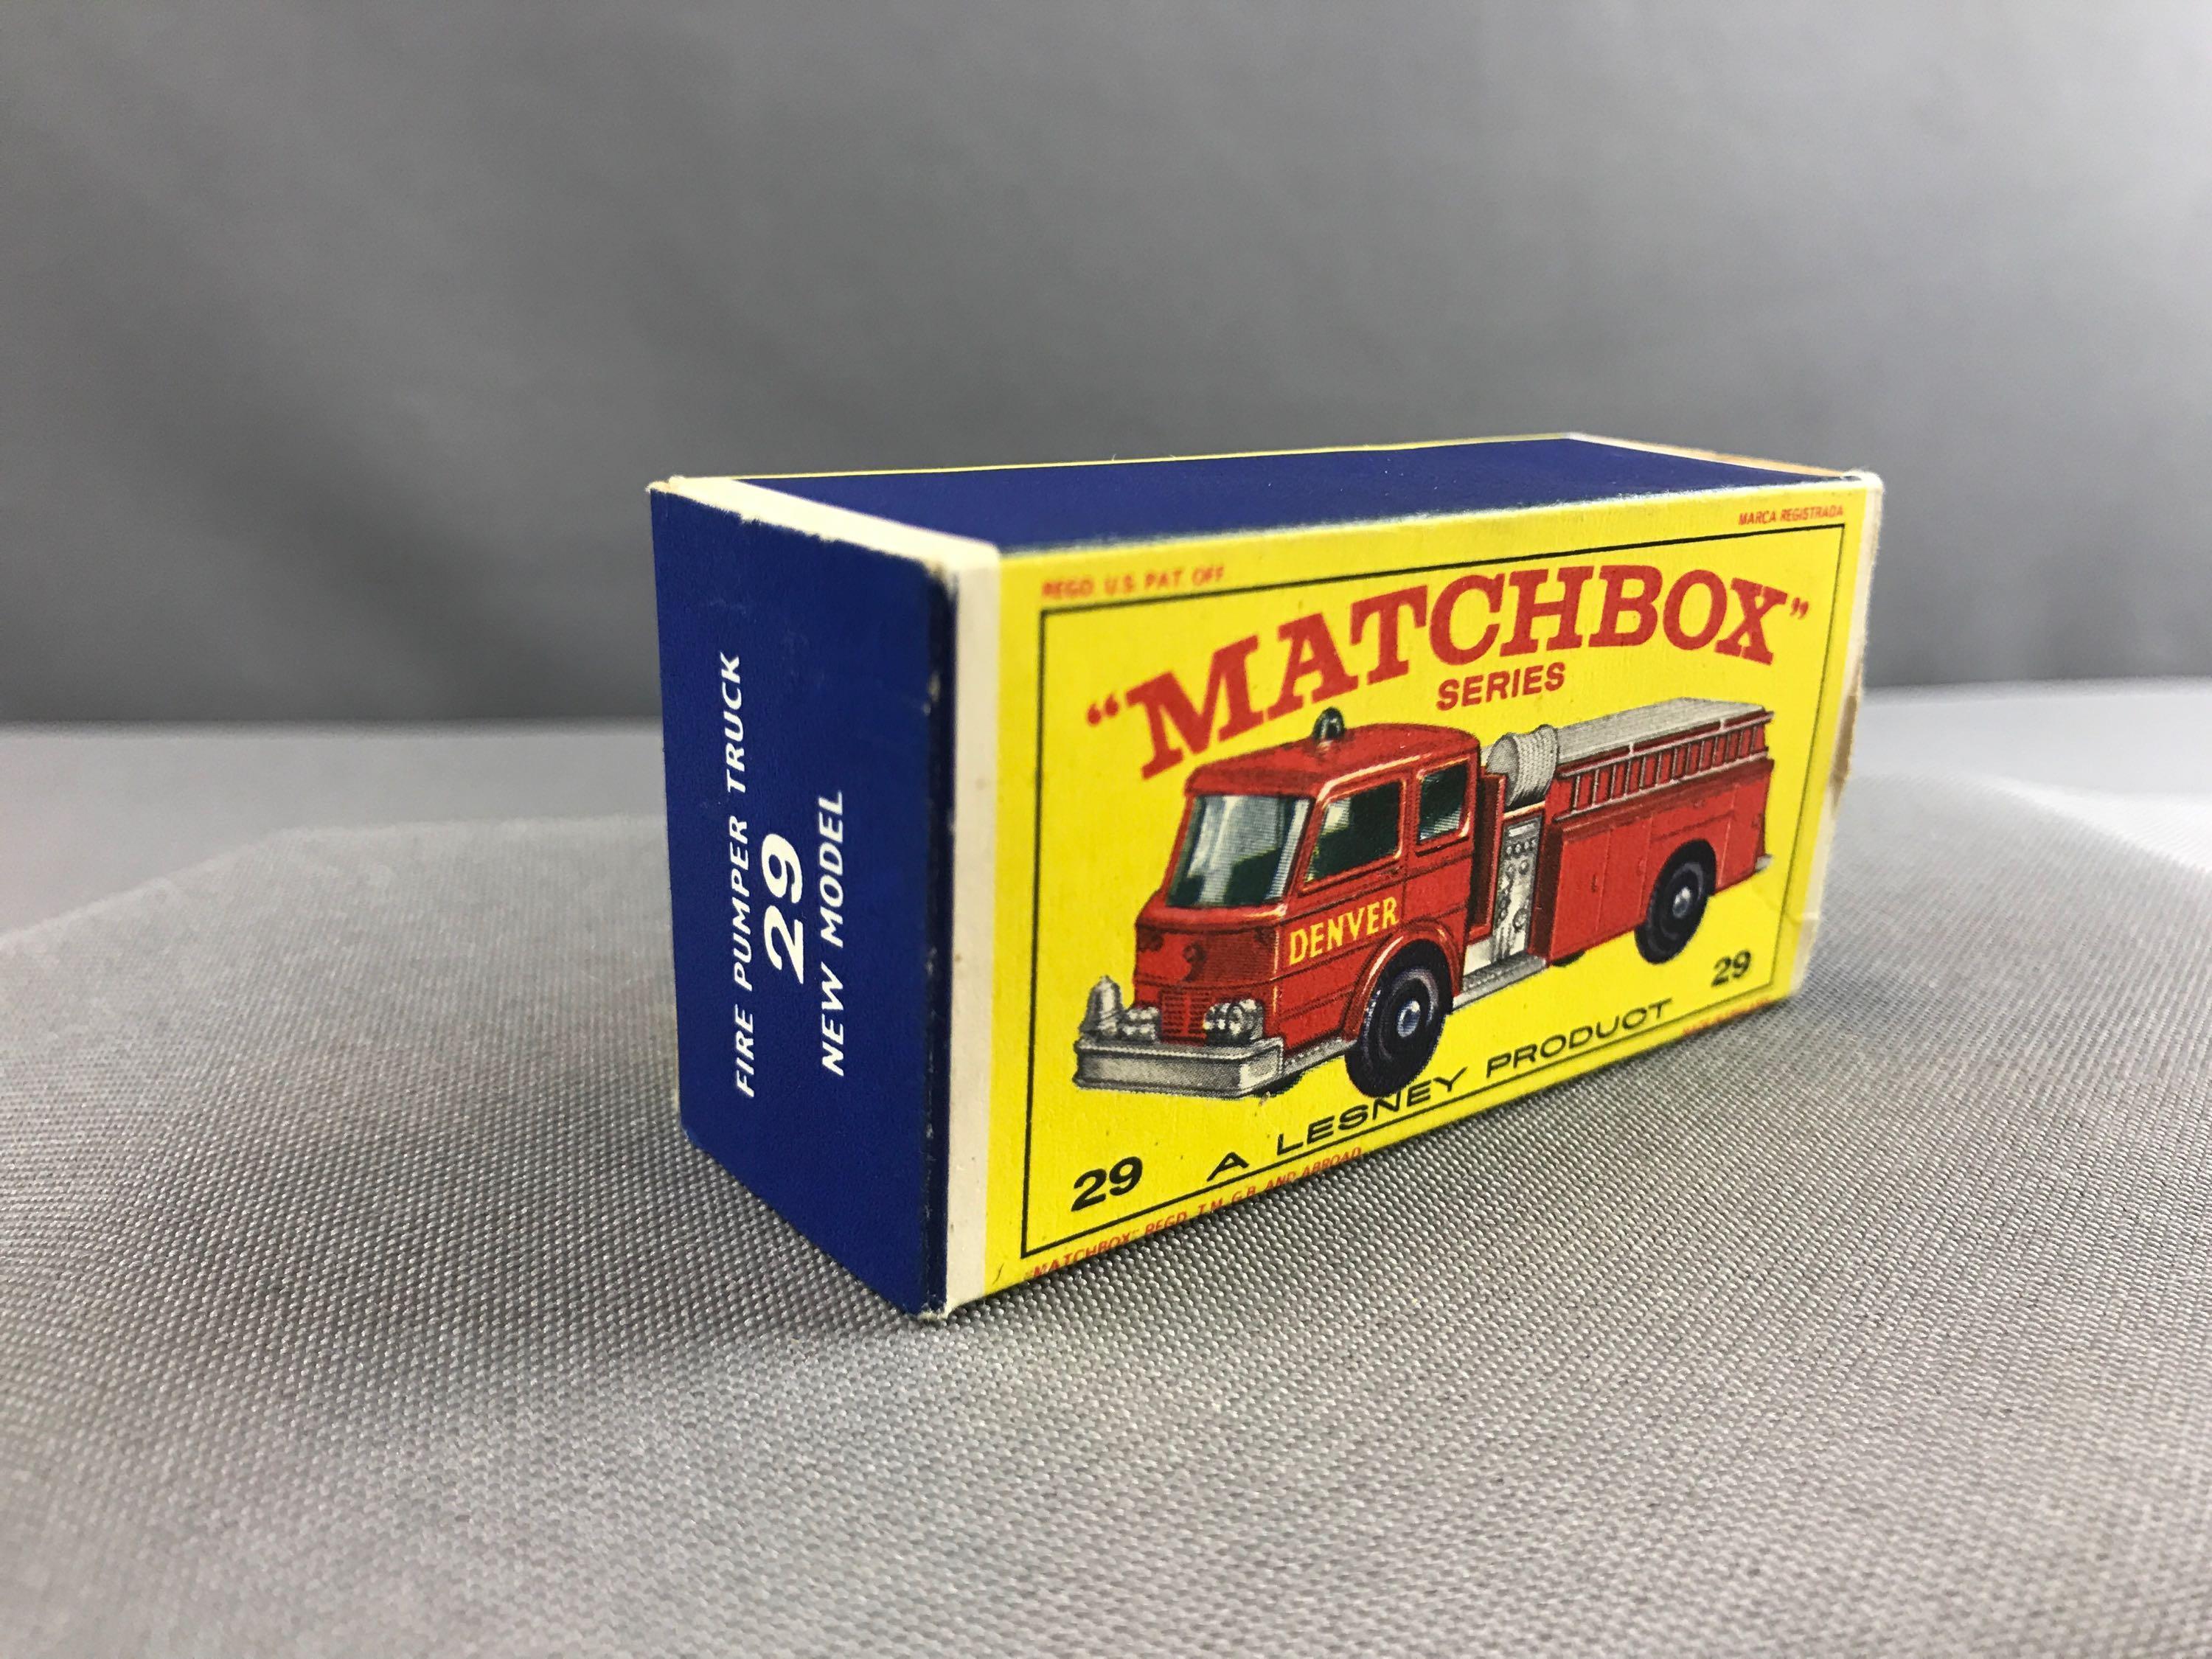 Matchbox No. 29 Fire Pumper Truck die cast vehicle with Original Box